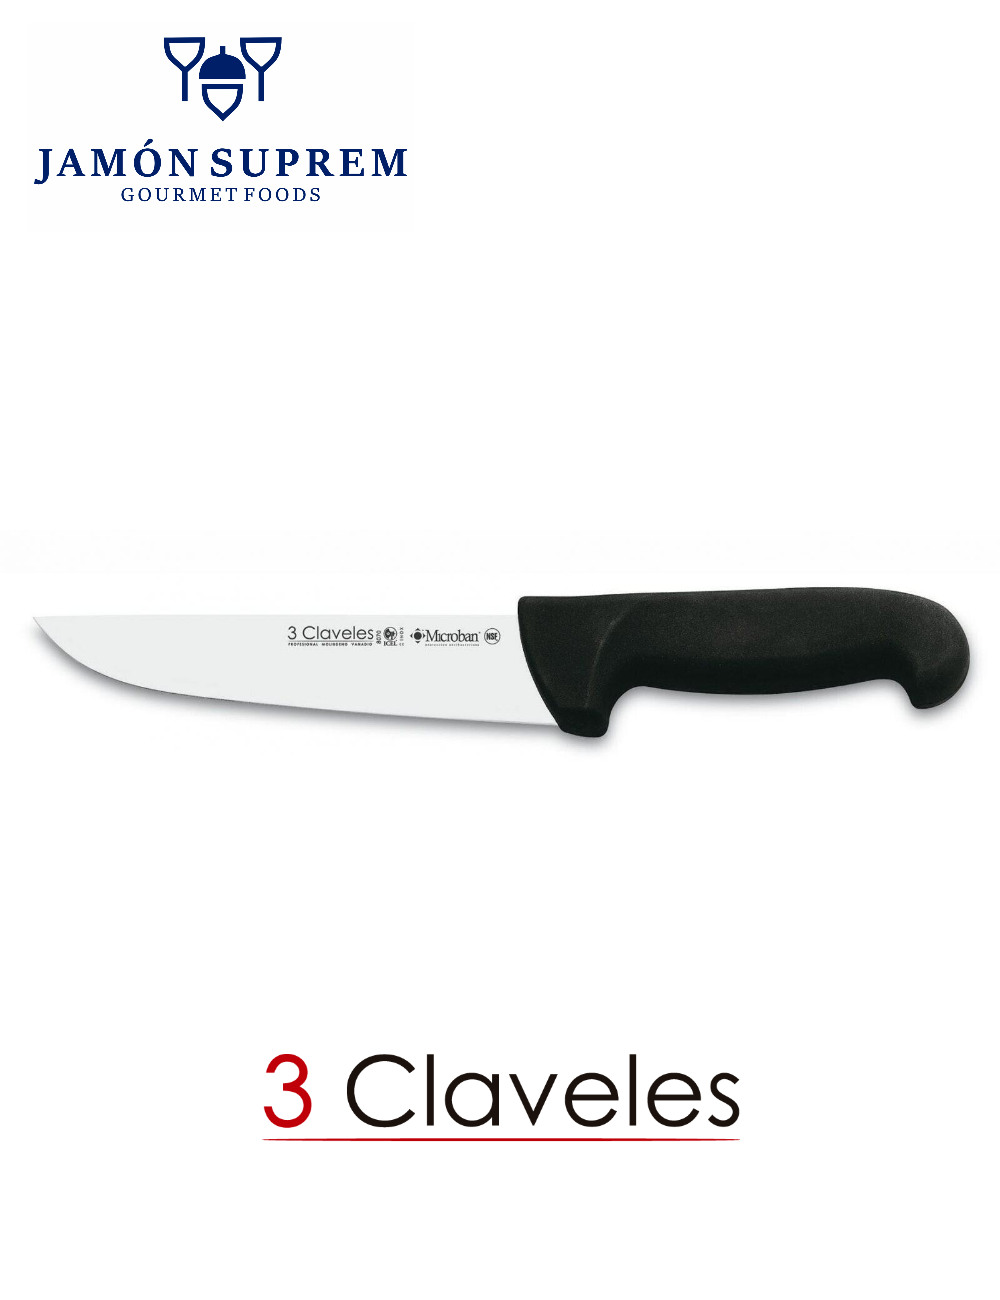 Cuchillo Carnicero Proflex 24 cm. 3 CLAVELES - Jamón Suprem